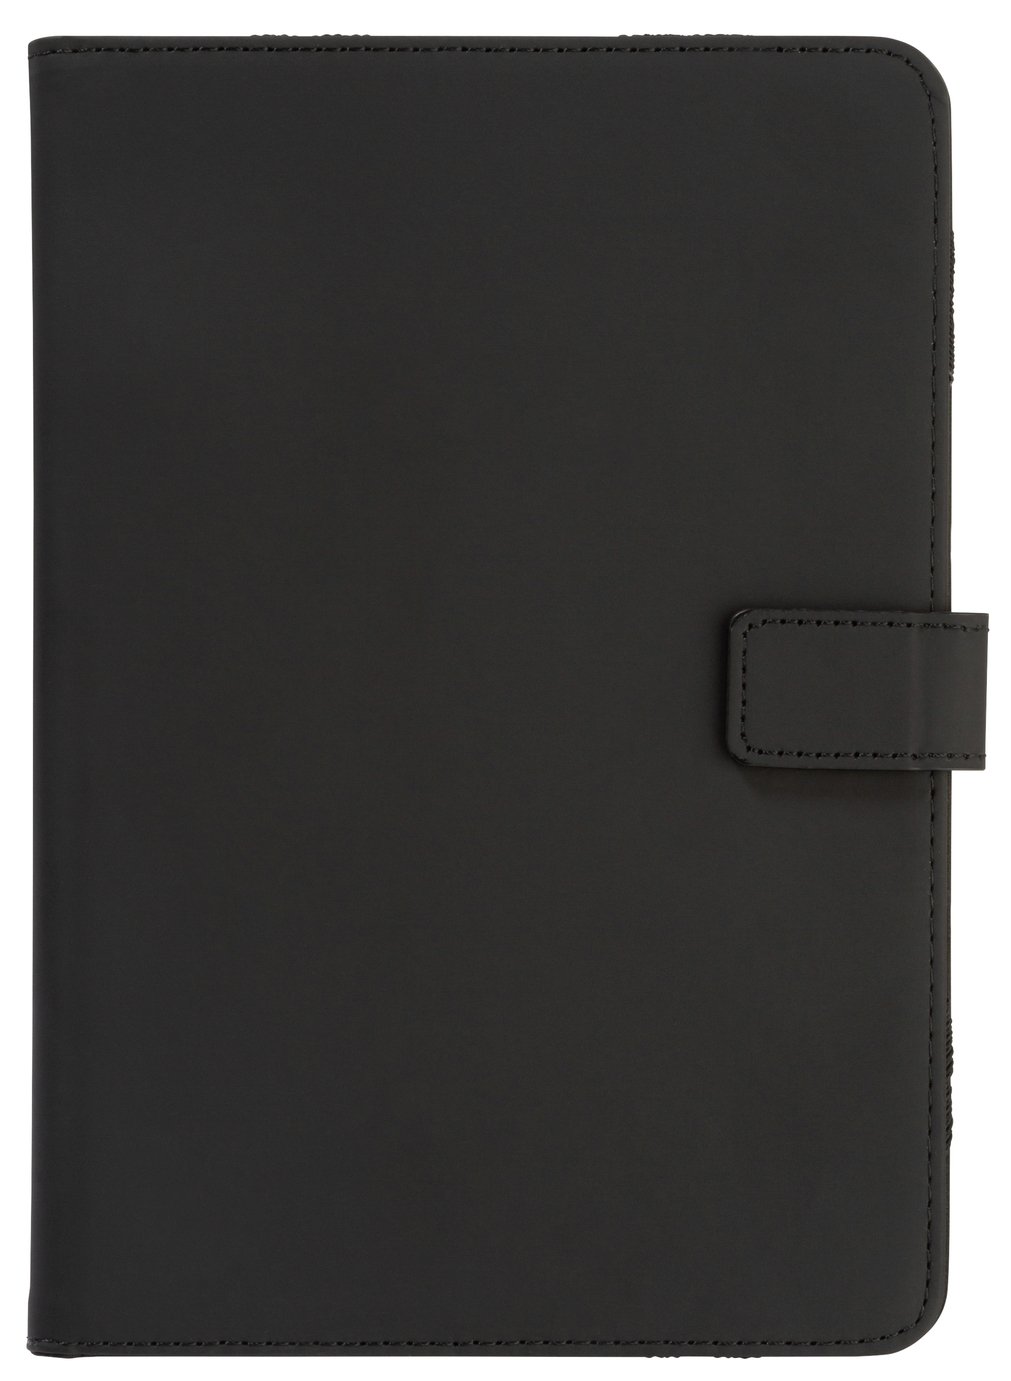 Universal 7/8 Inch PVC Tablet Case - Black